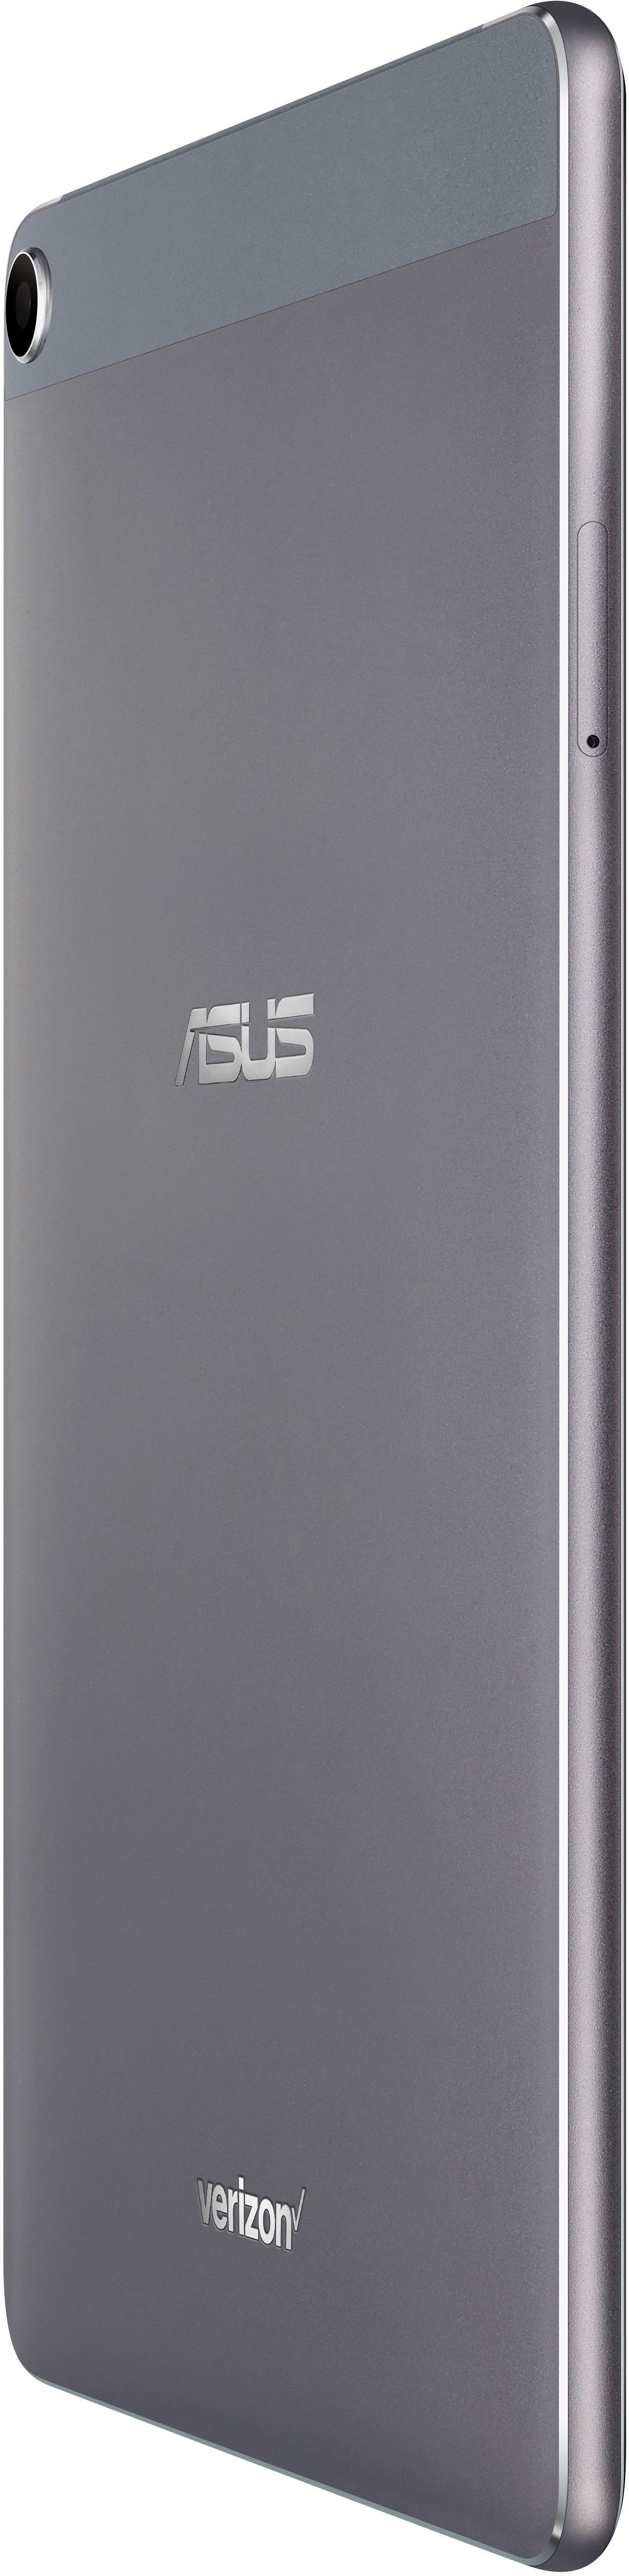 Asus Zenpad Z8s 7 9 Tablet 16gb Wi Fi 4g Lte Verizon Wireless Black Zt5kl Vz1 Best Buy